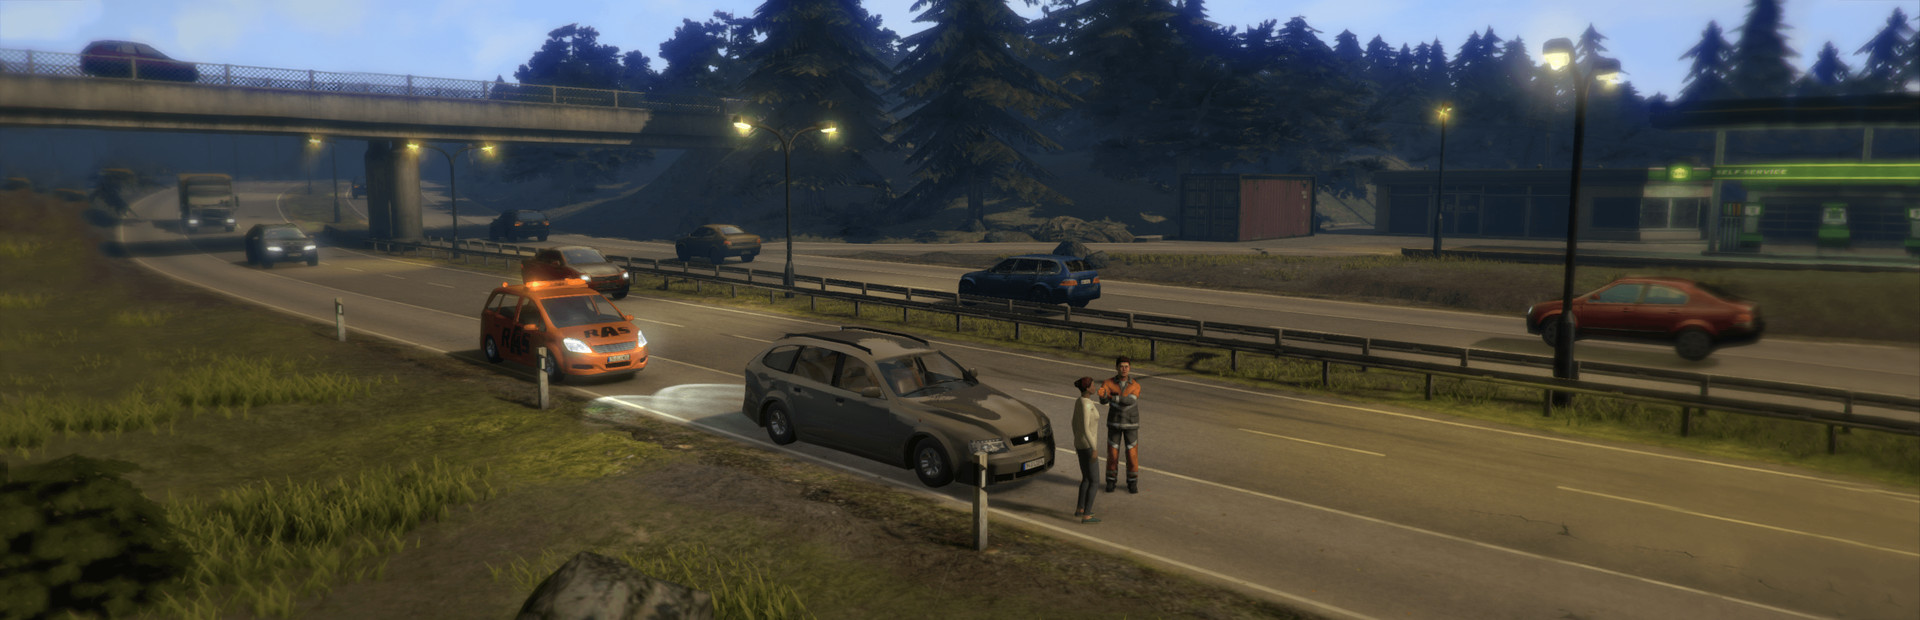 Roadside Assistance Simulator cover image